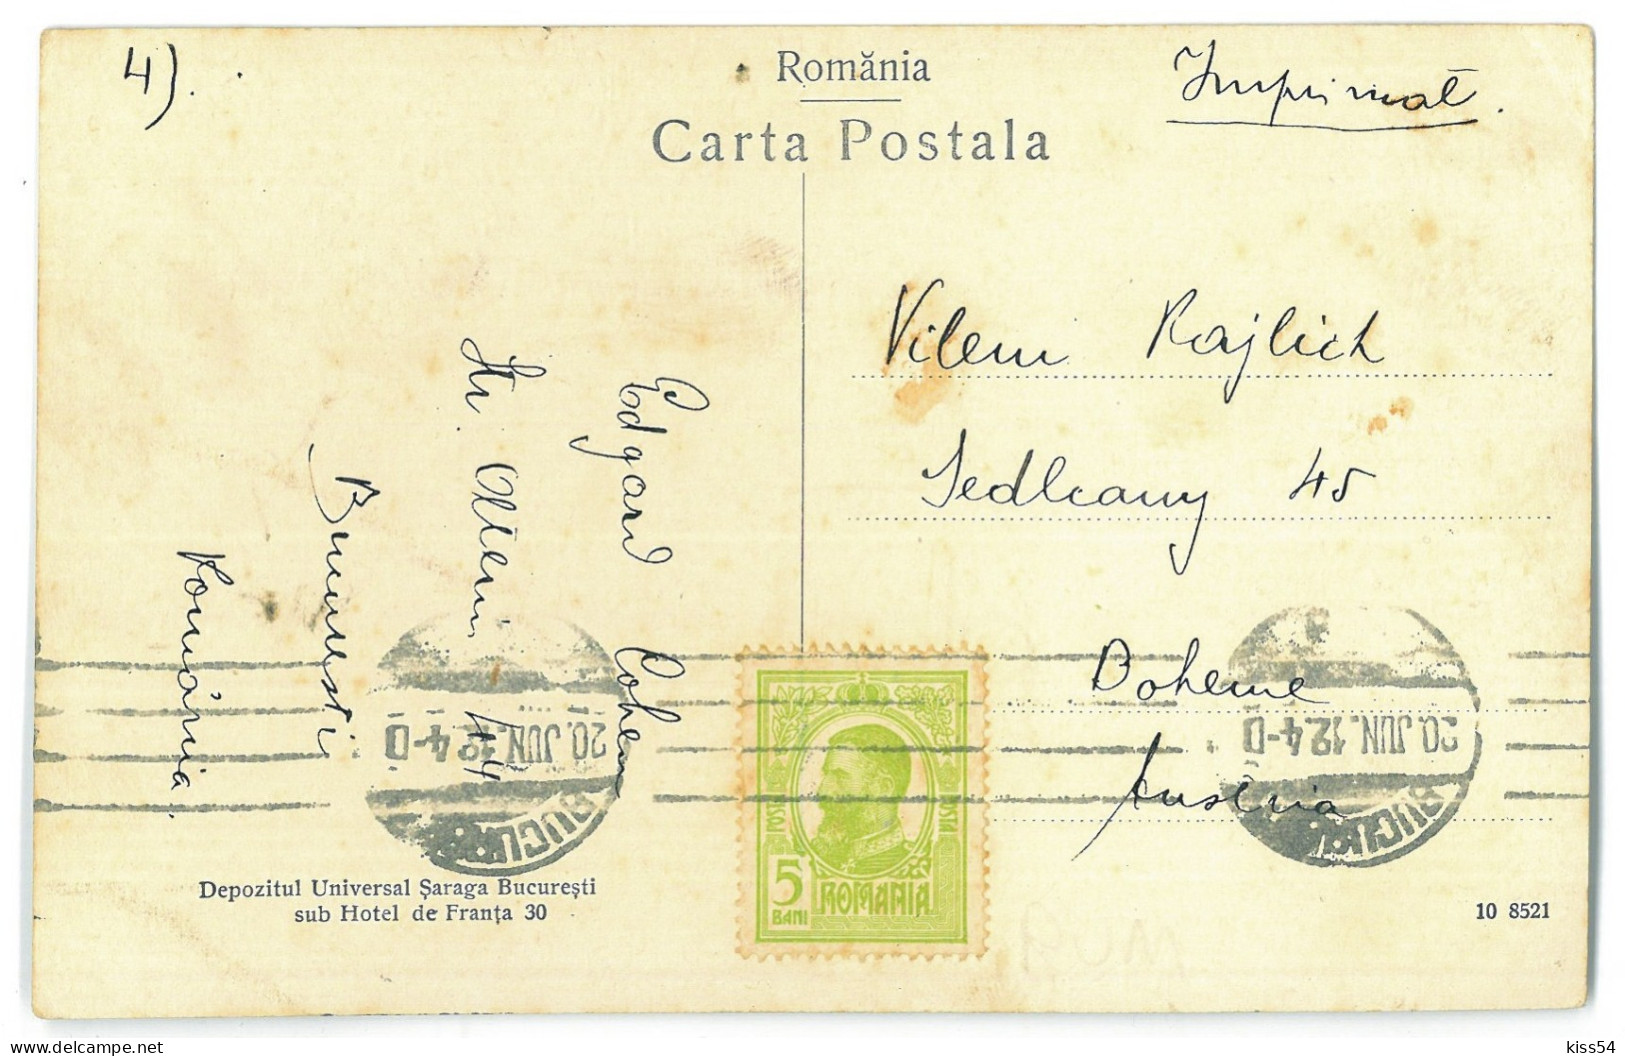 RO 40 - 23896 BUCURESTI, Bristol Hotel, Romania - Old Postcard - Used - 1912 - Roumanie